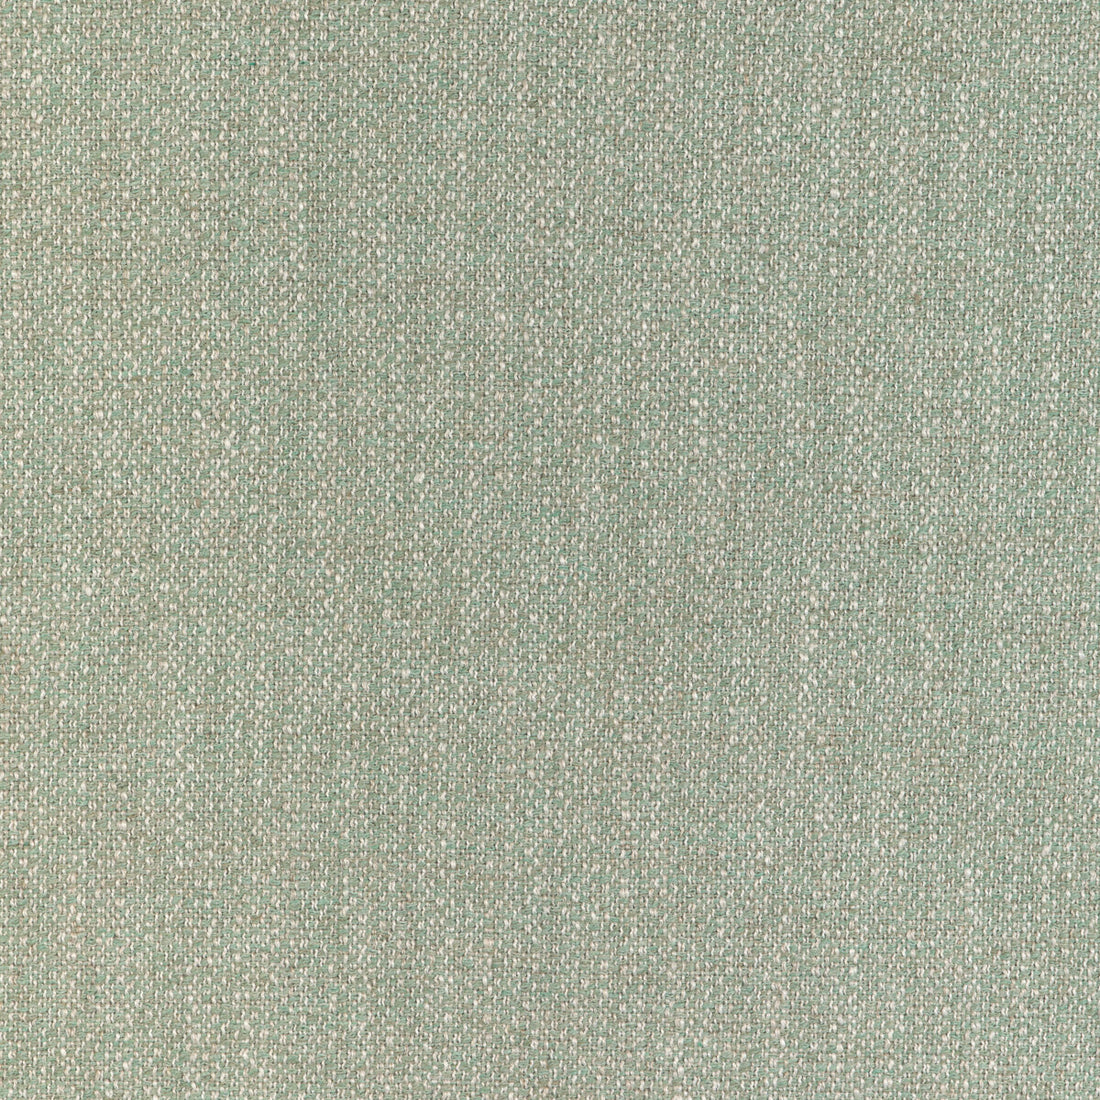 Torus fabric in mist color - pattern GWF-3793.1613.0 - by Lee Jofa Modern in the Kelly Wearstler VIII collection